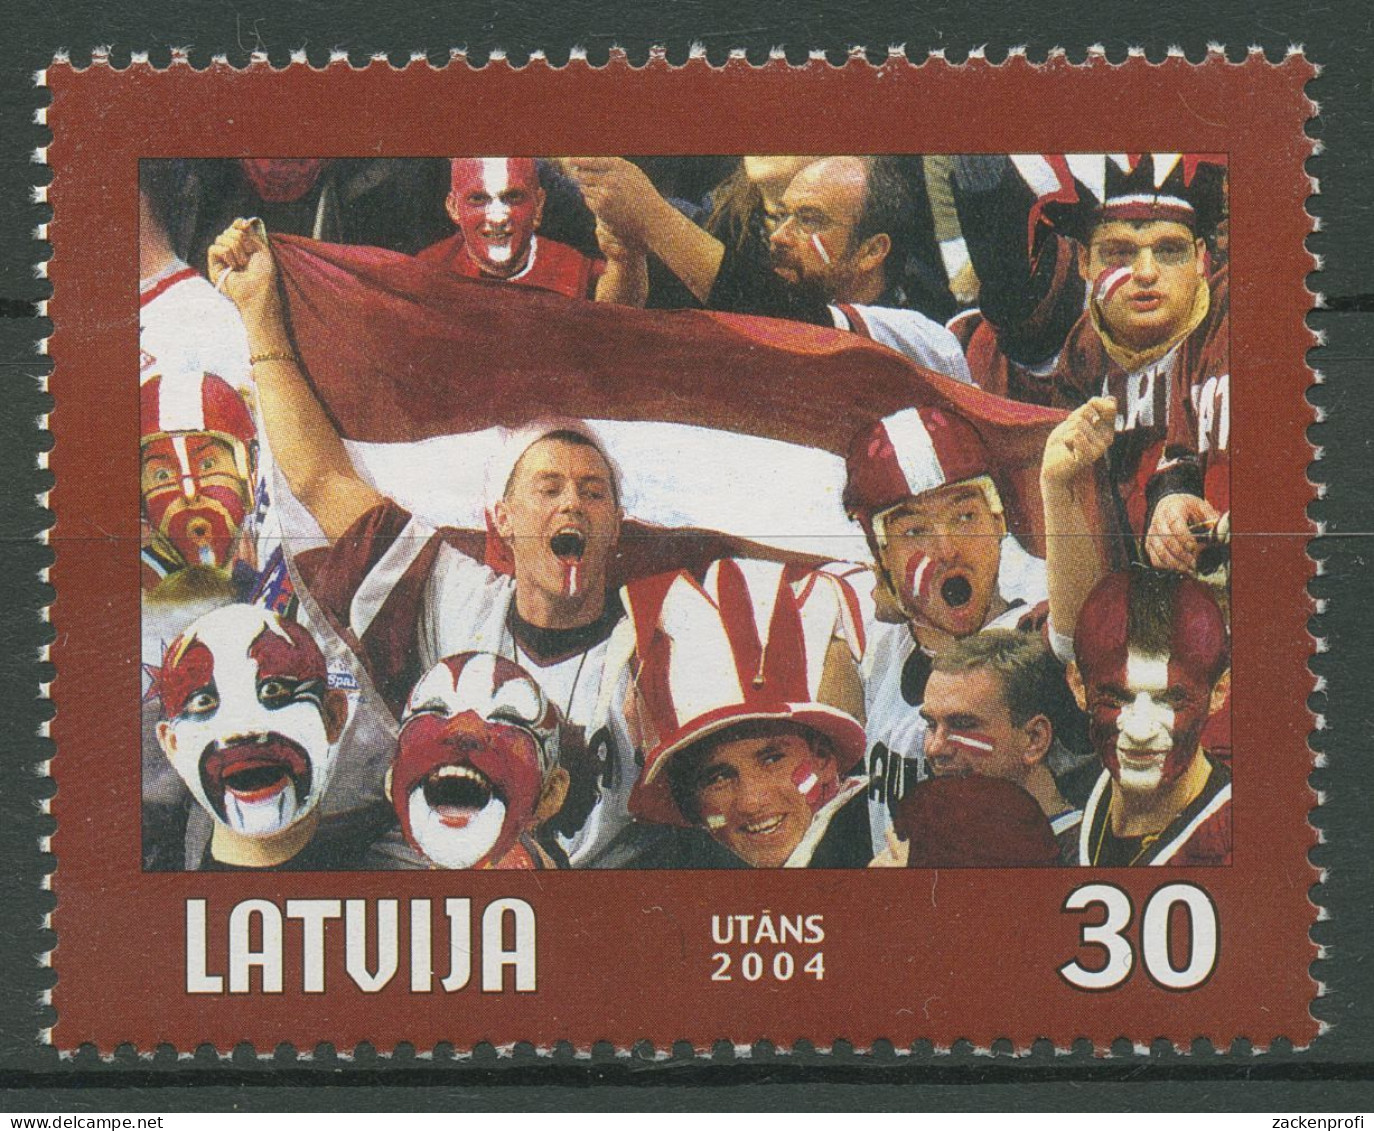 Lettland 2004 Eishockey-WM Riga 610 A Postfrisch - Latvia